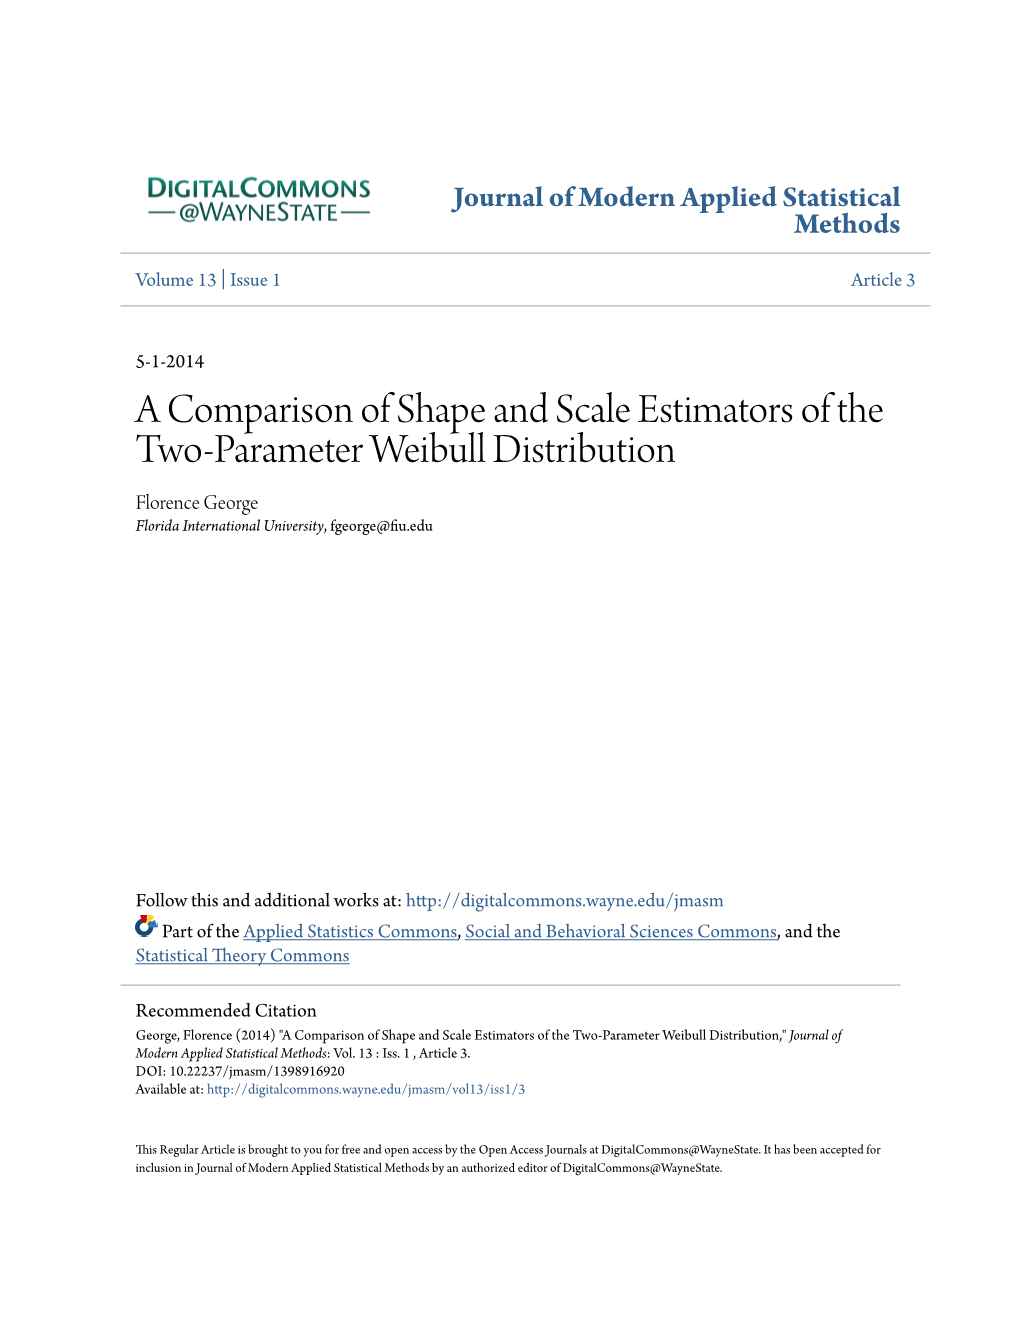 A Comparison of Shape and Scale Estimators of the Two-Parameter Weibull Distribution Florence George Florida International University, Fgeorge@Fiu.Edu